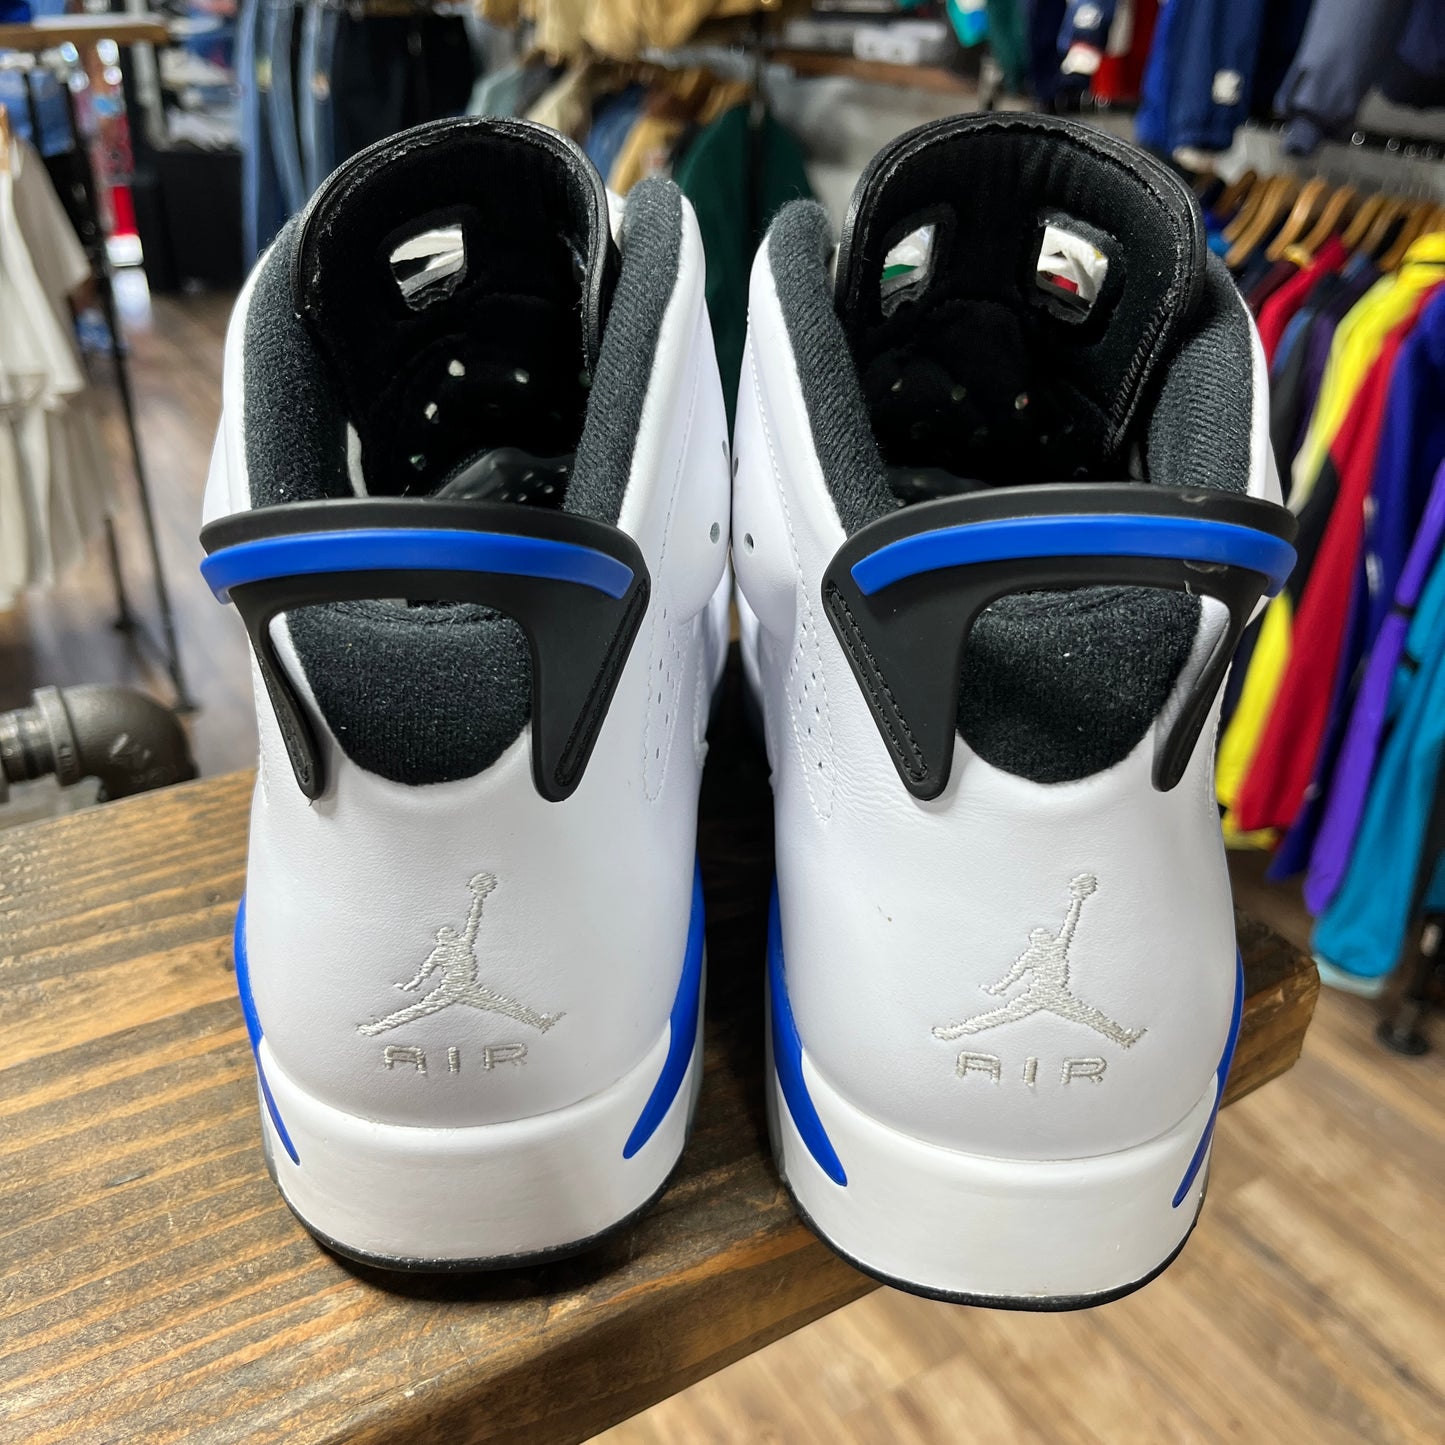 Jordan 6 'Sport Blue' Size 14